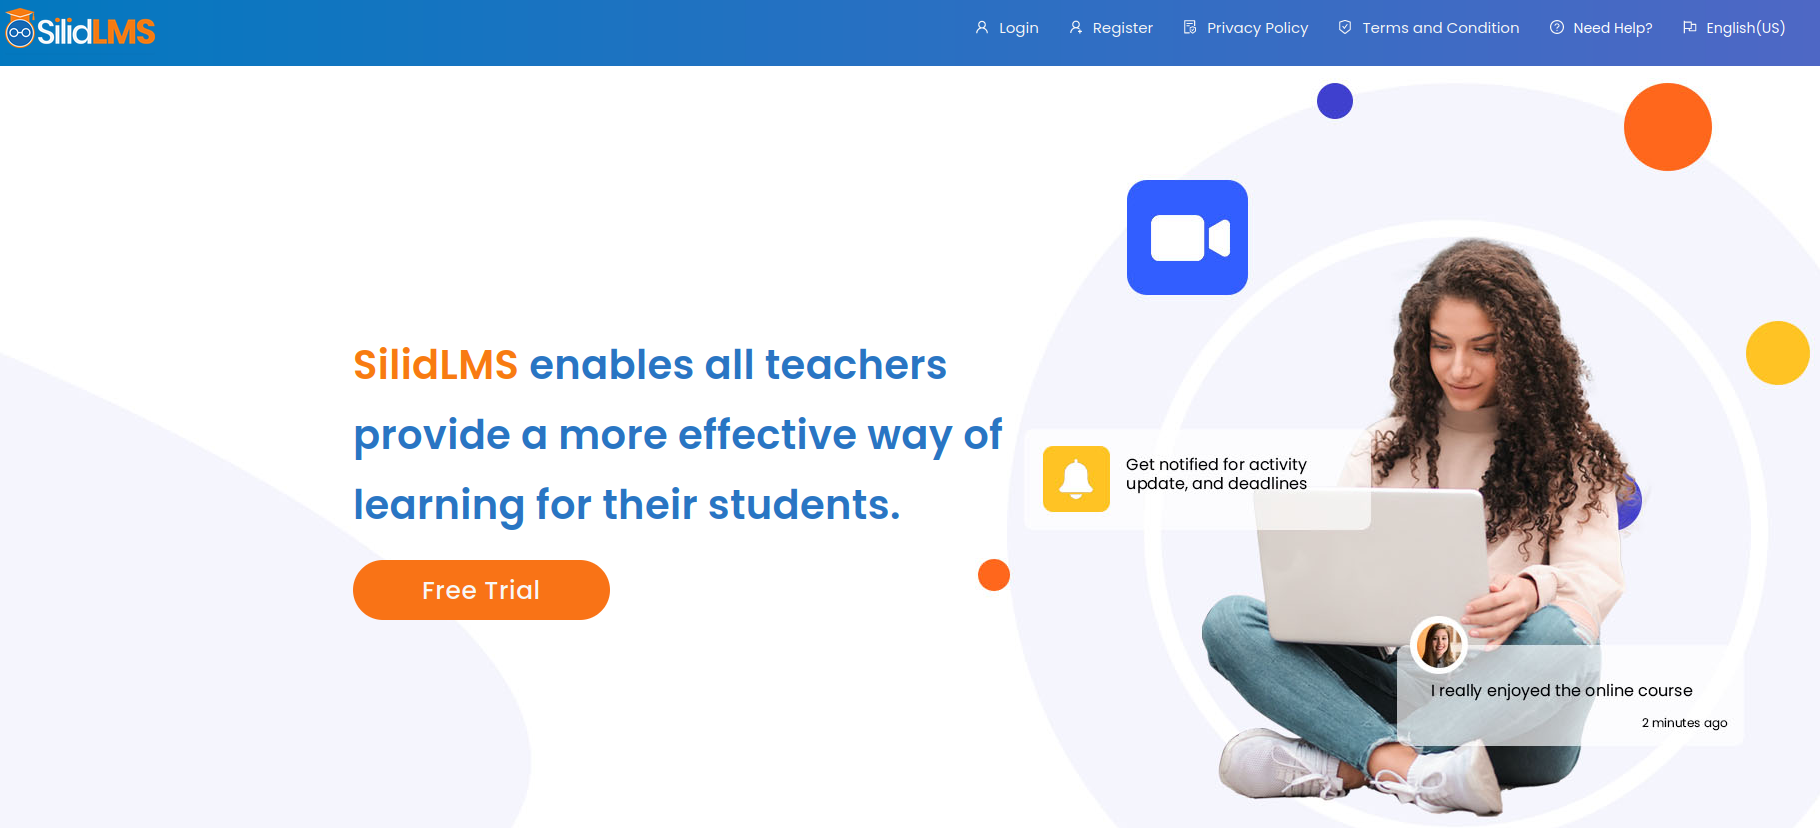 SilidLMS, a learning platform for teachers